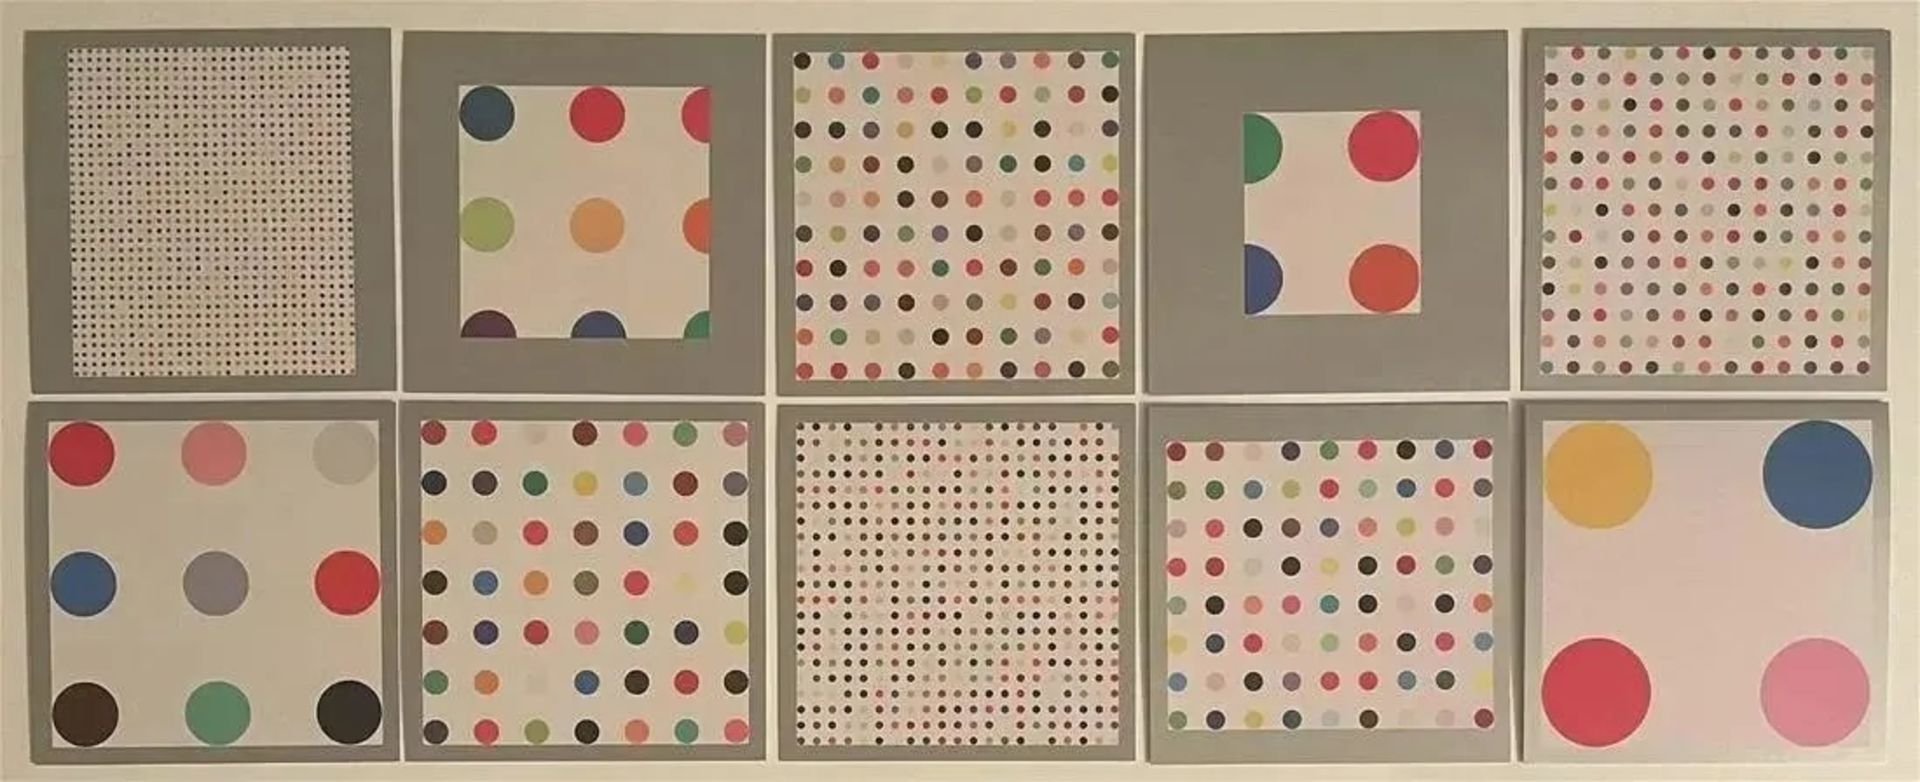 Damien Hirst lot of 10 "Spot" Prints - Image 6 of 6